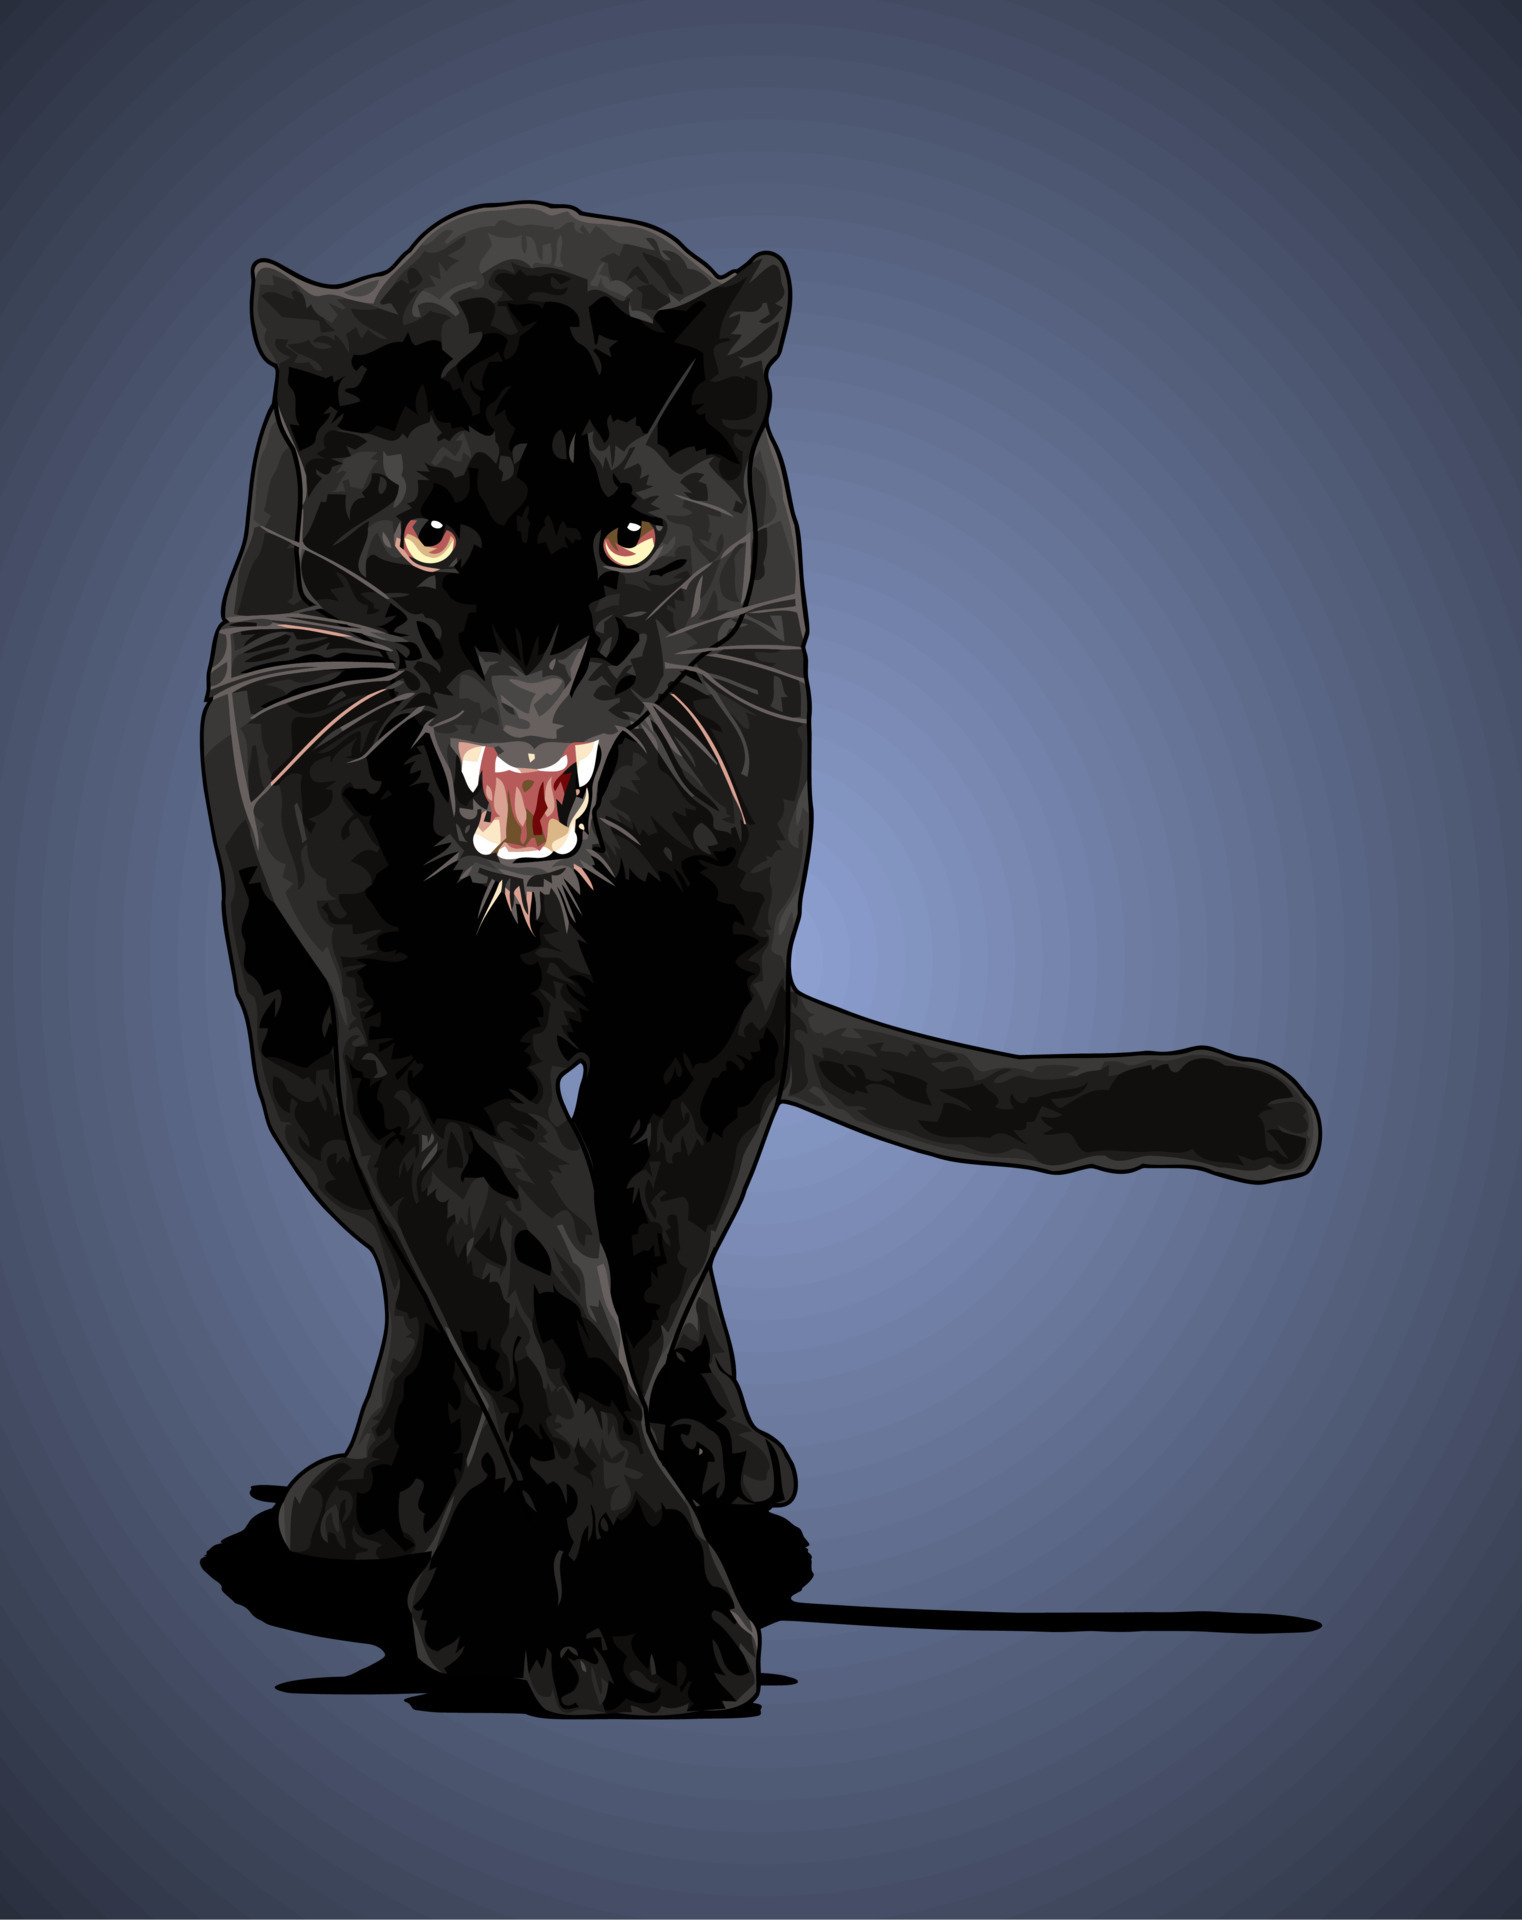 Tải xuống APK Black Panther Animal wallpaper cho Android